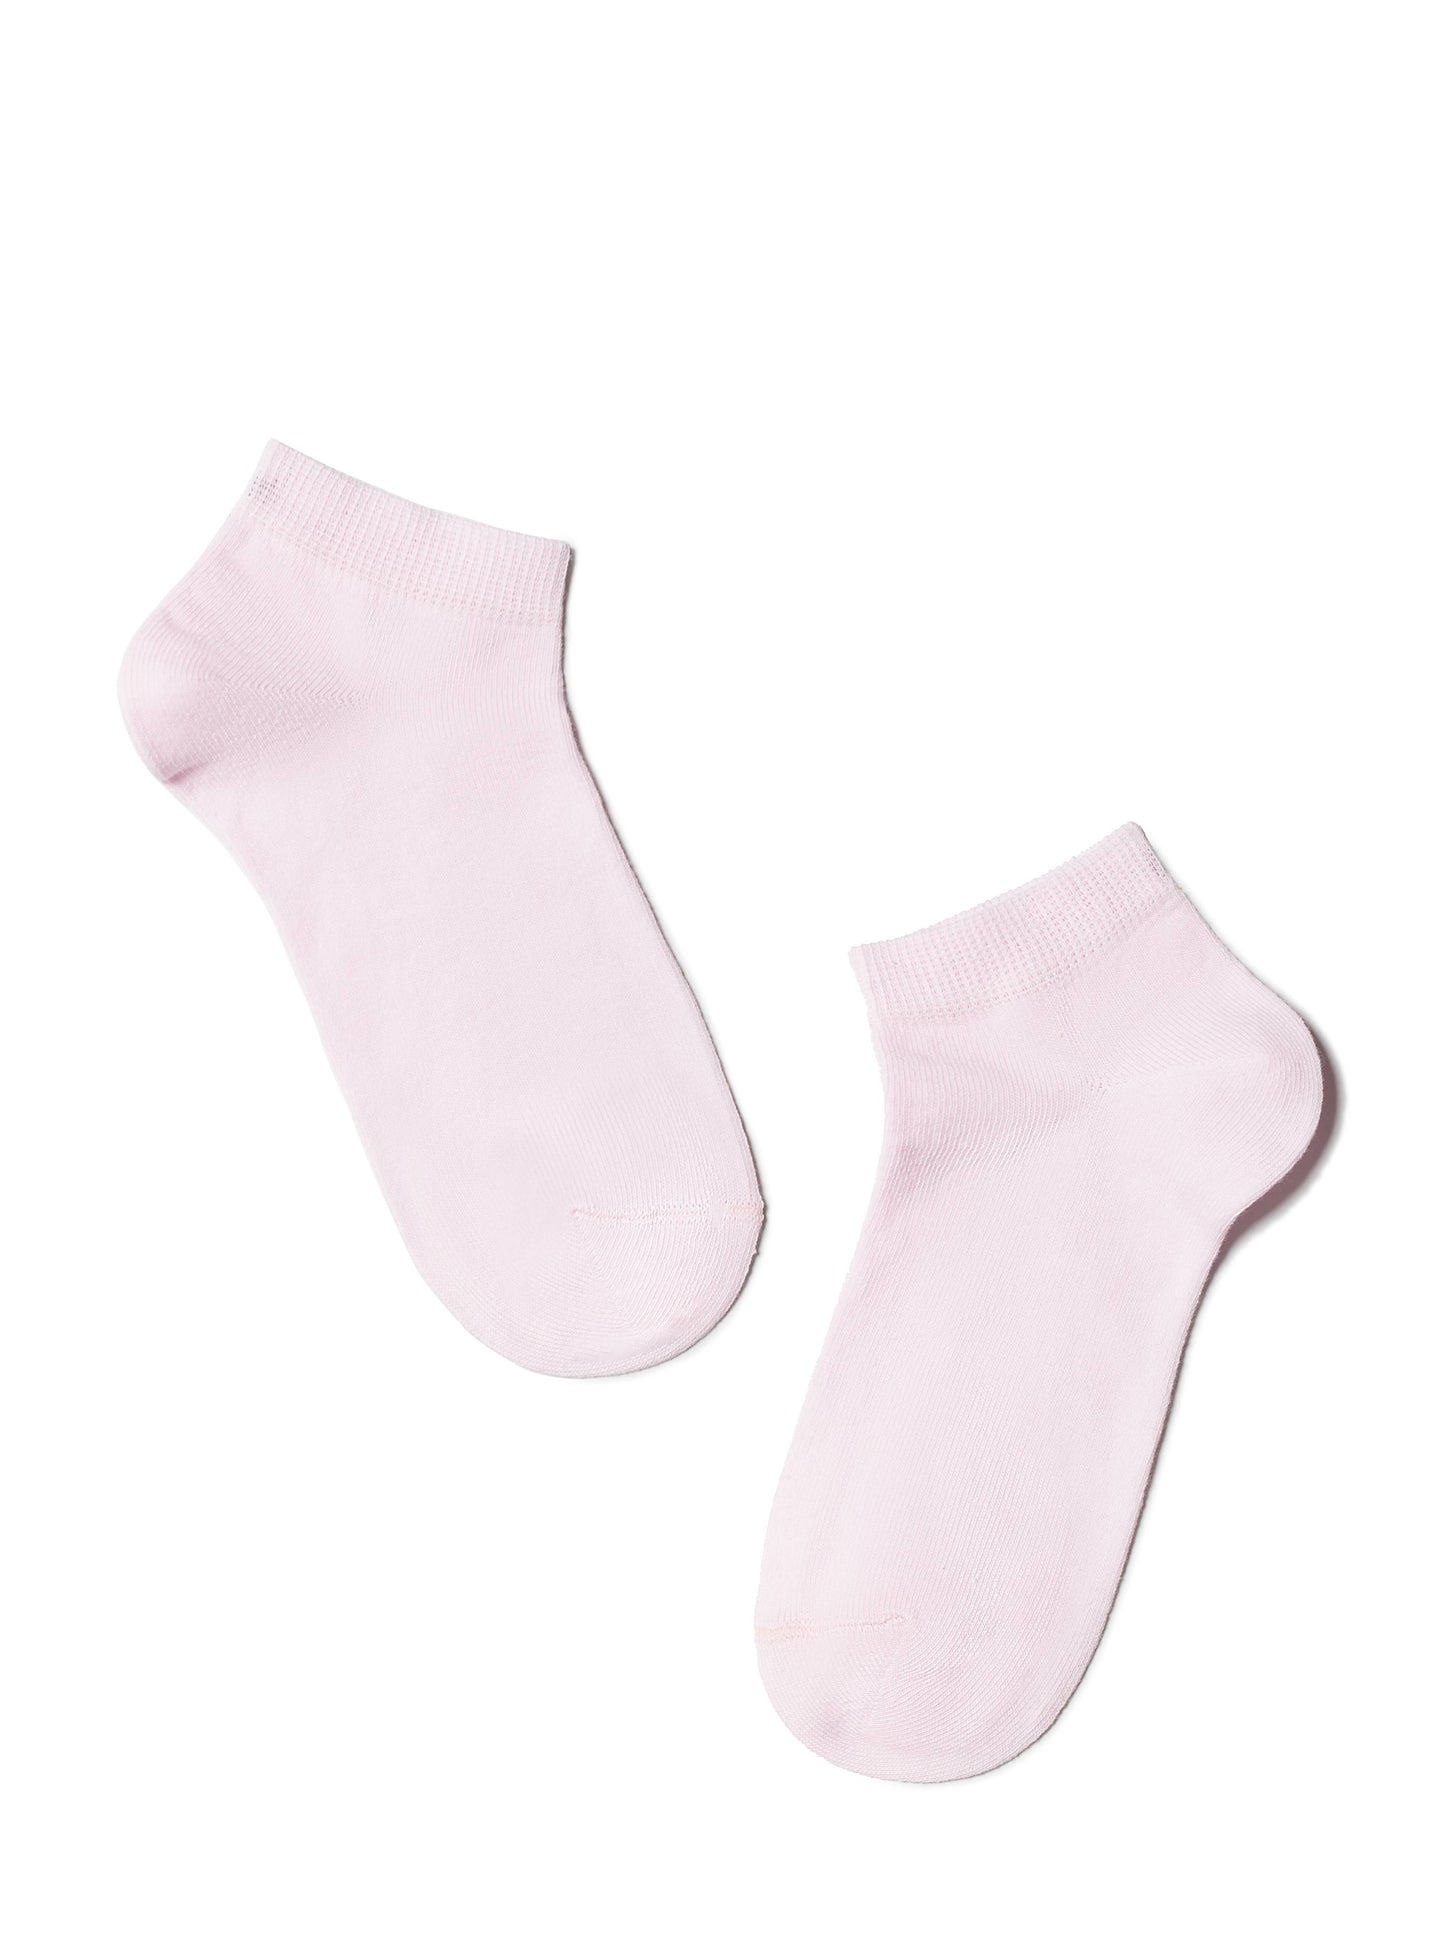 Conte Esli #19С-149СПЕ(000) - Lot of 2 pairs Classic Cotton Cropped Women's Socks